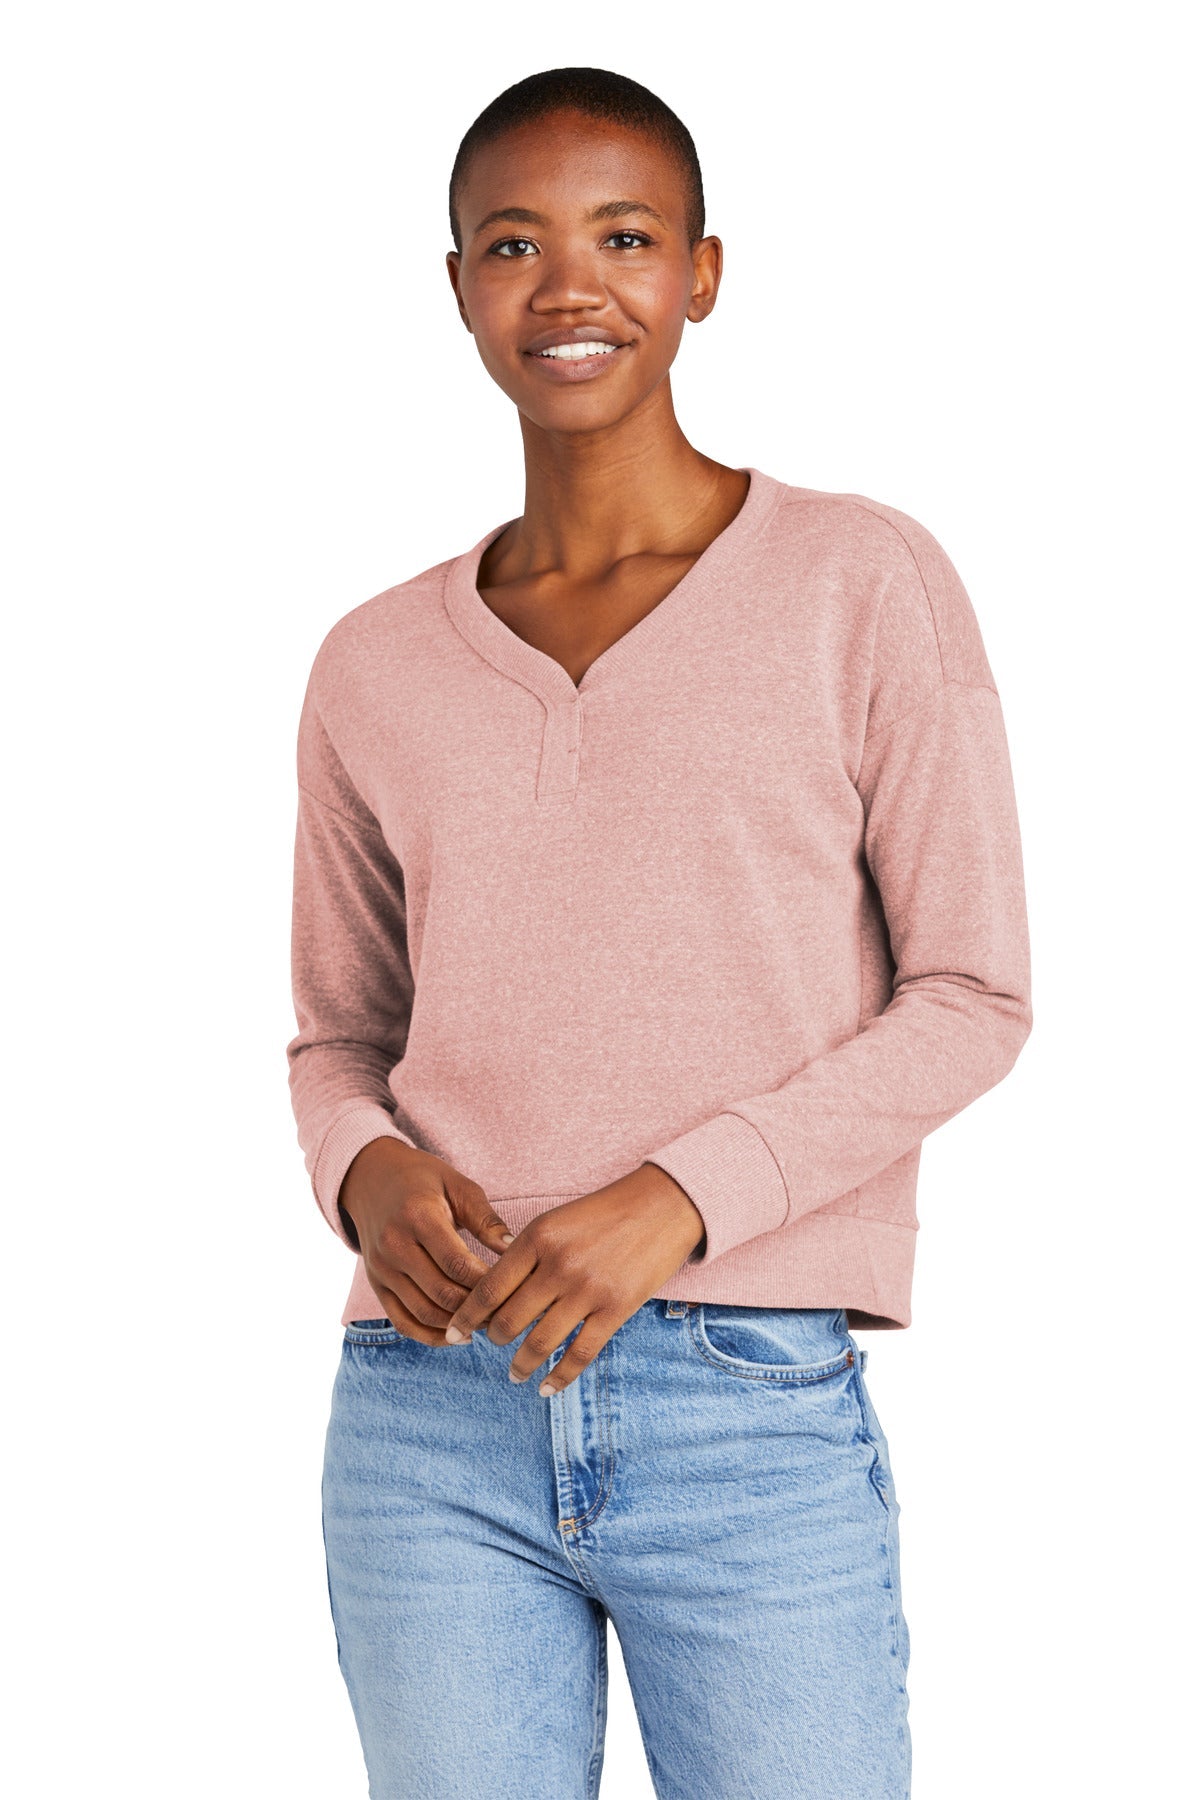 District® Women's Perfect Tri® Fleece V-Neck Sweatshirt DT1312 - DFW Impression